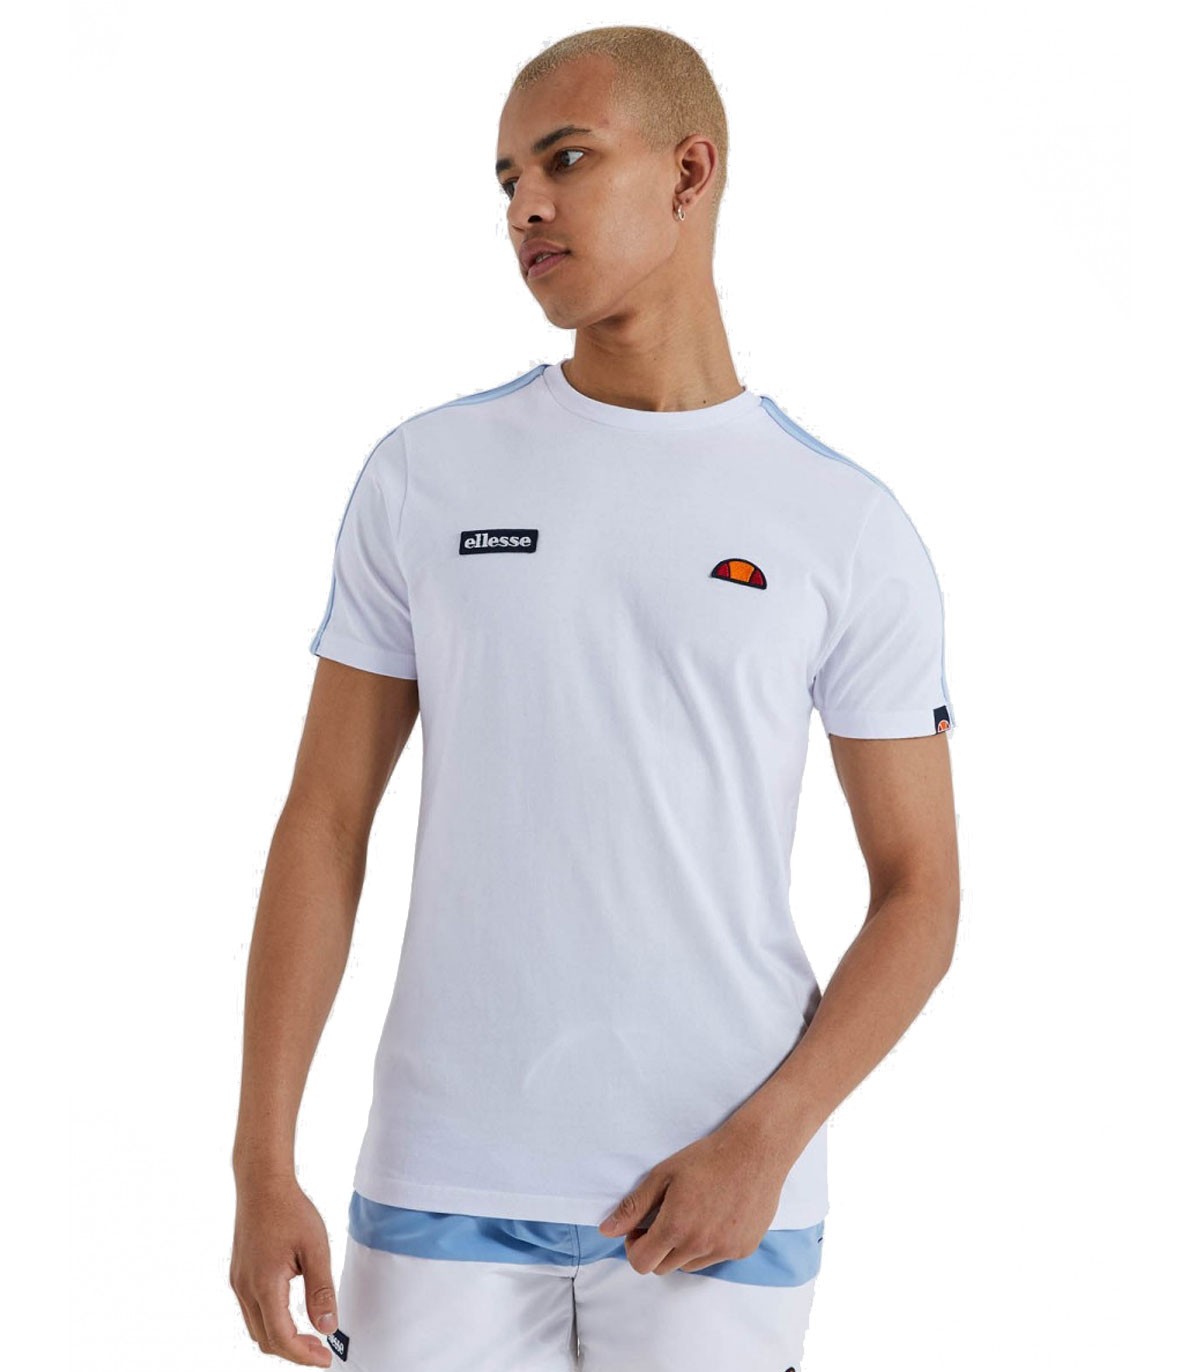 Ellesse - Camiseta Hombre Blanca - La Versa